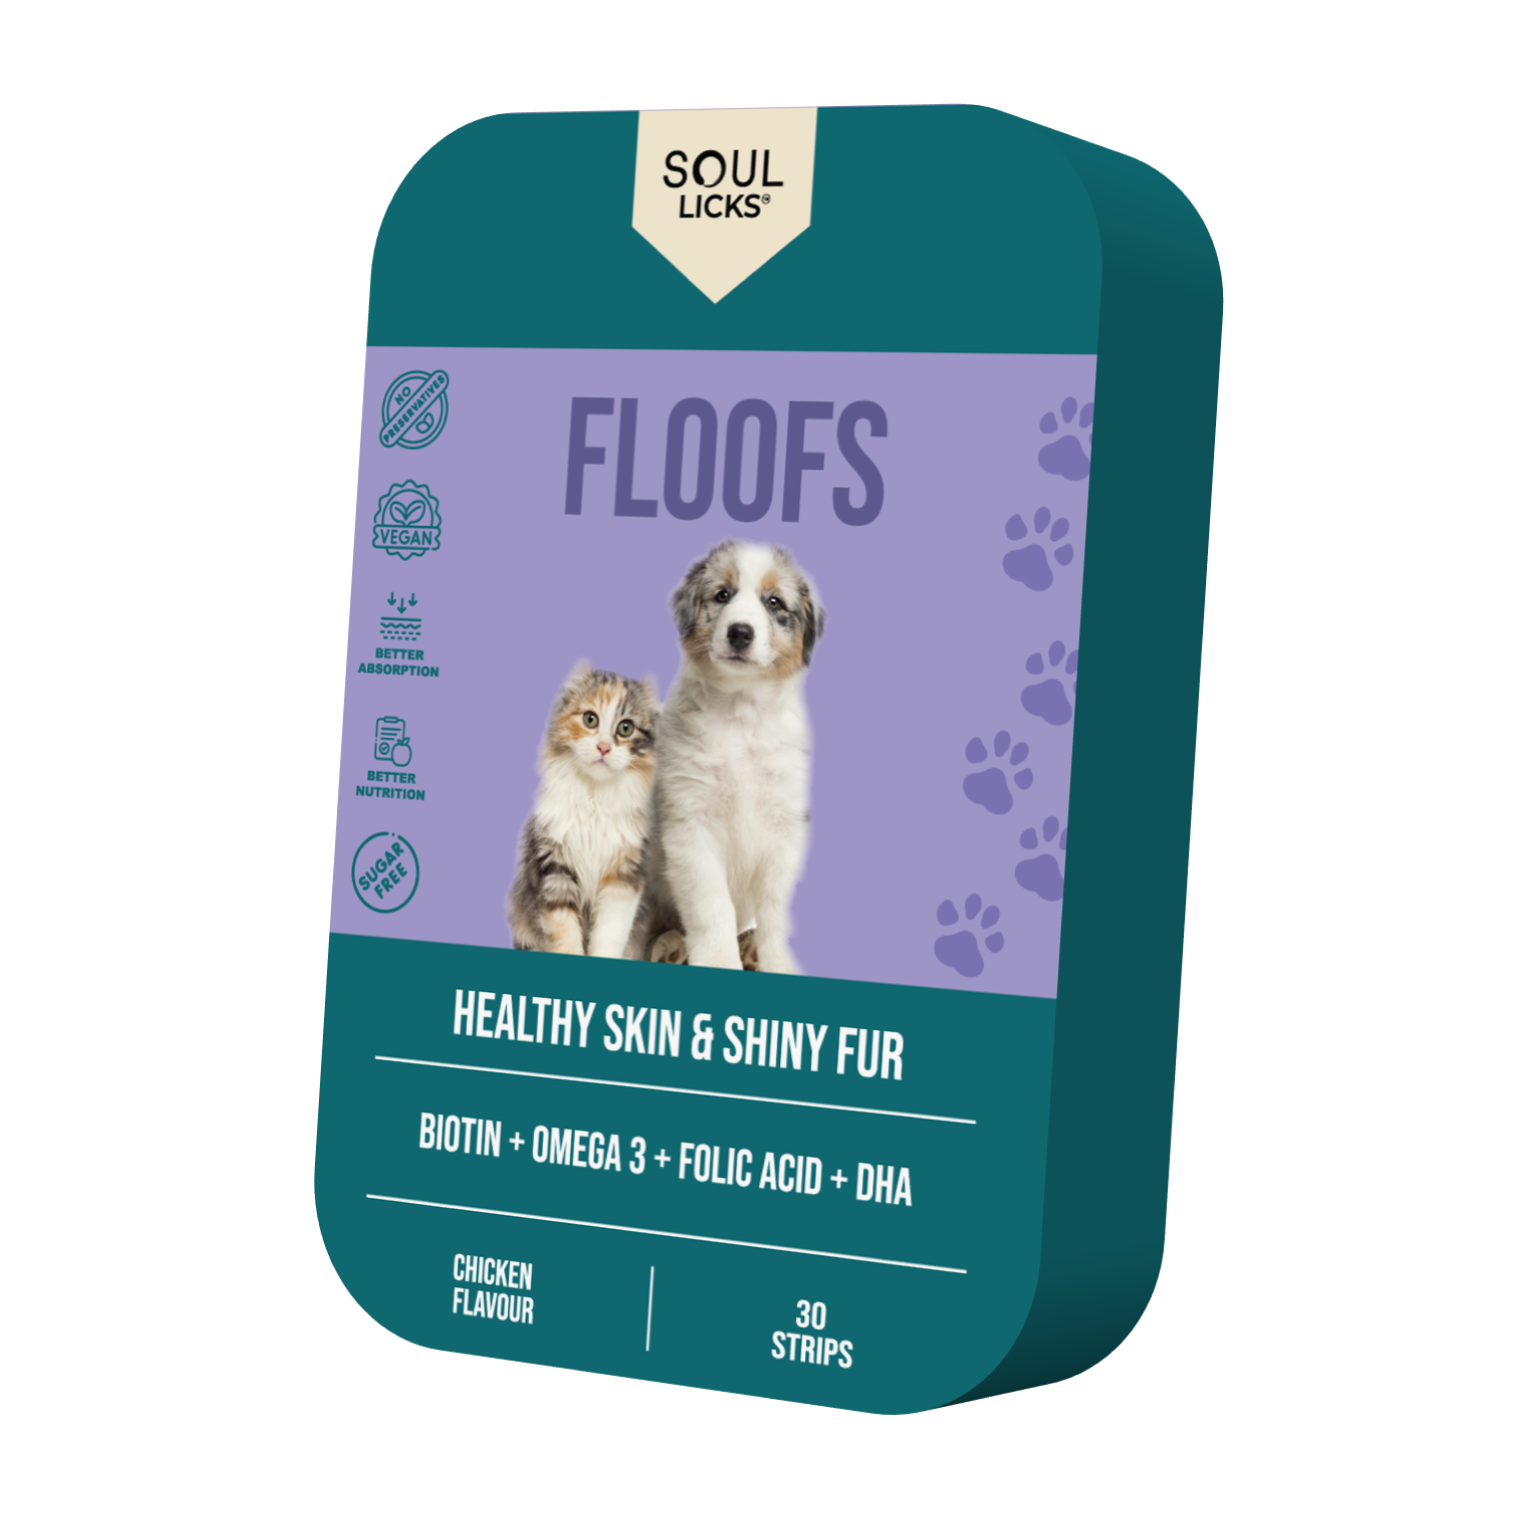 Floofs - For shiny, healthy & floofy fur